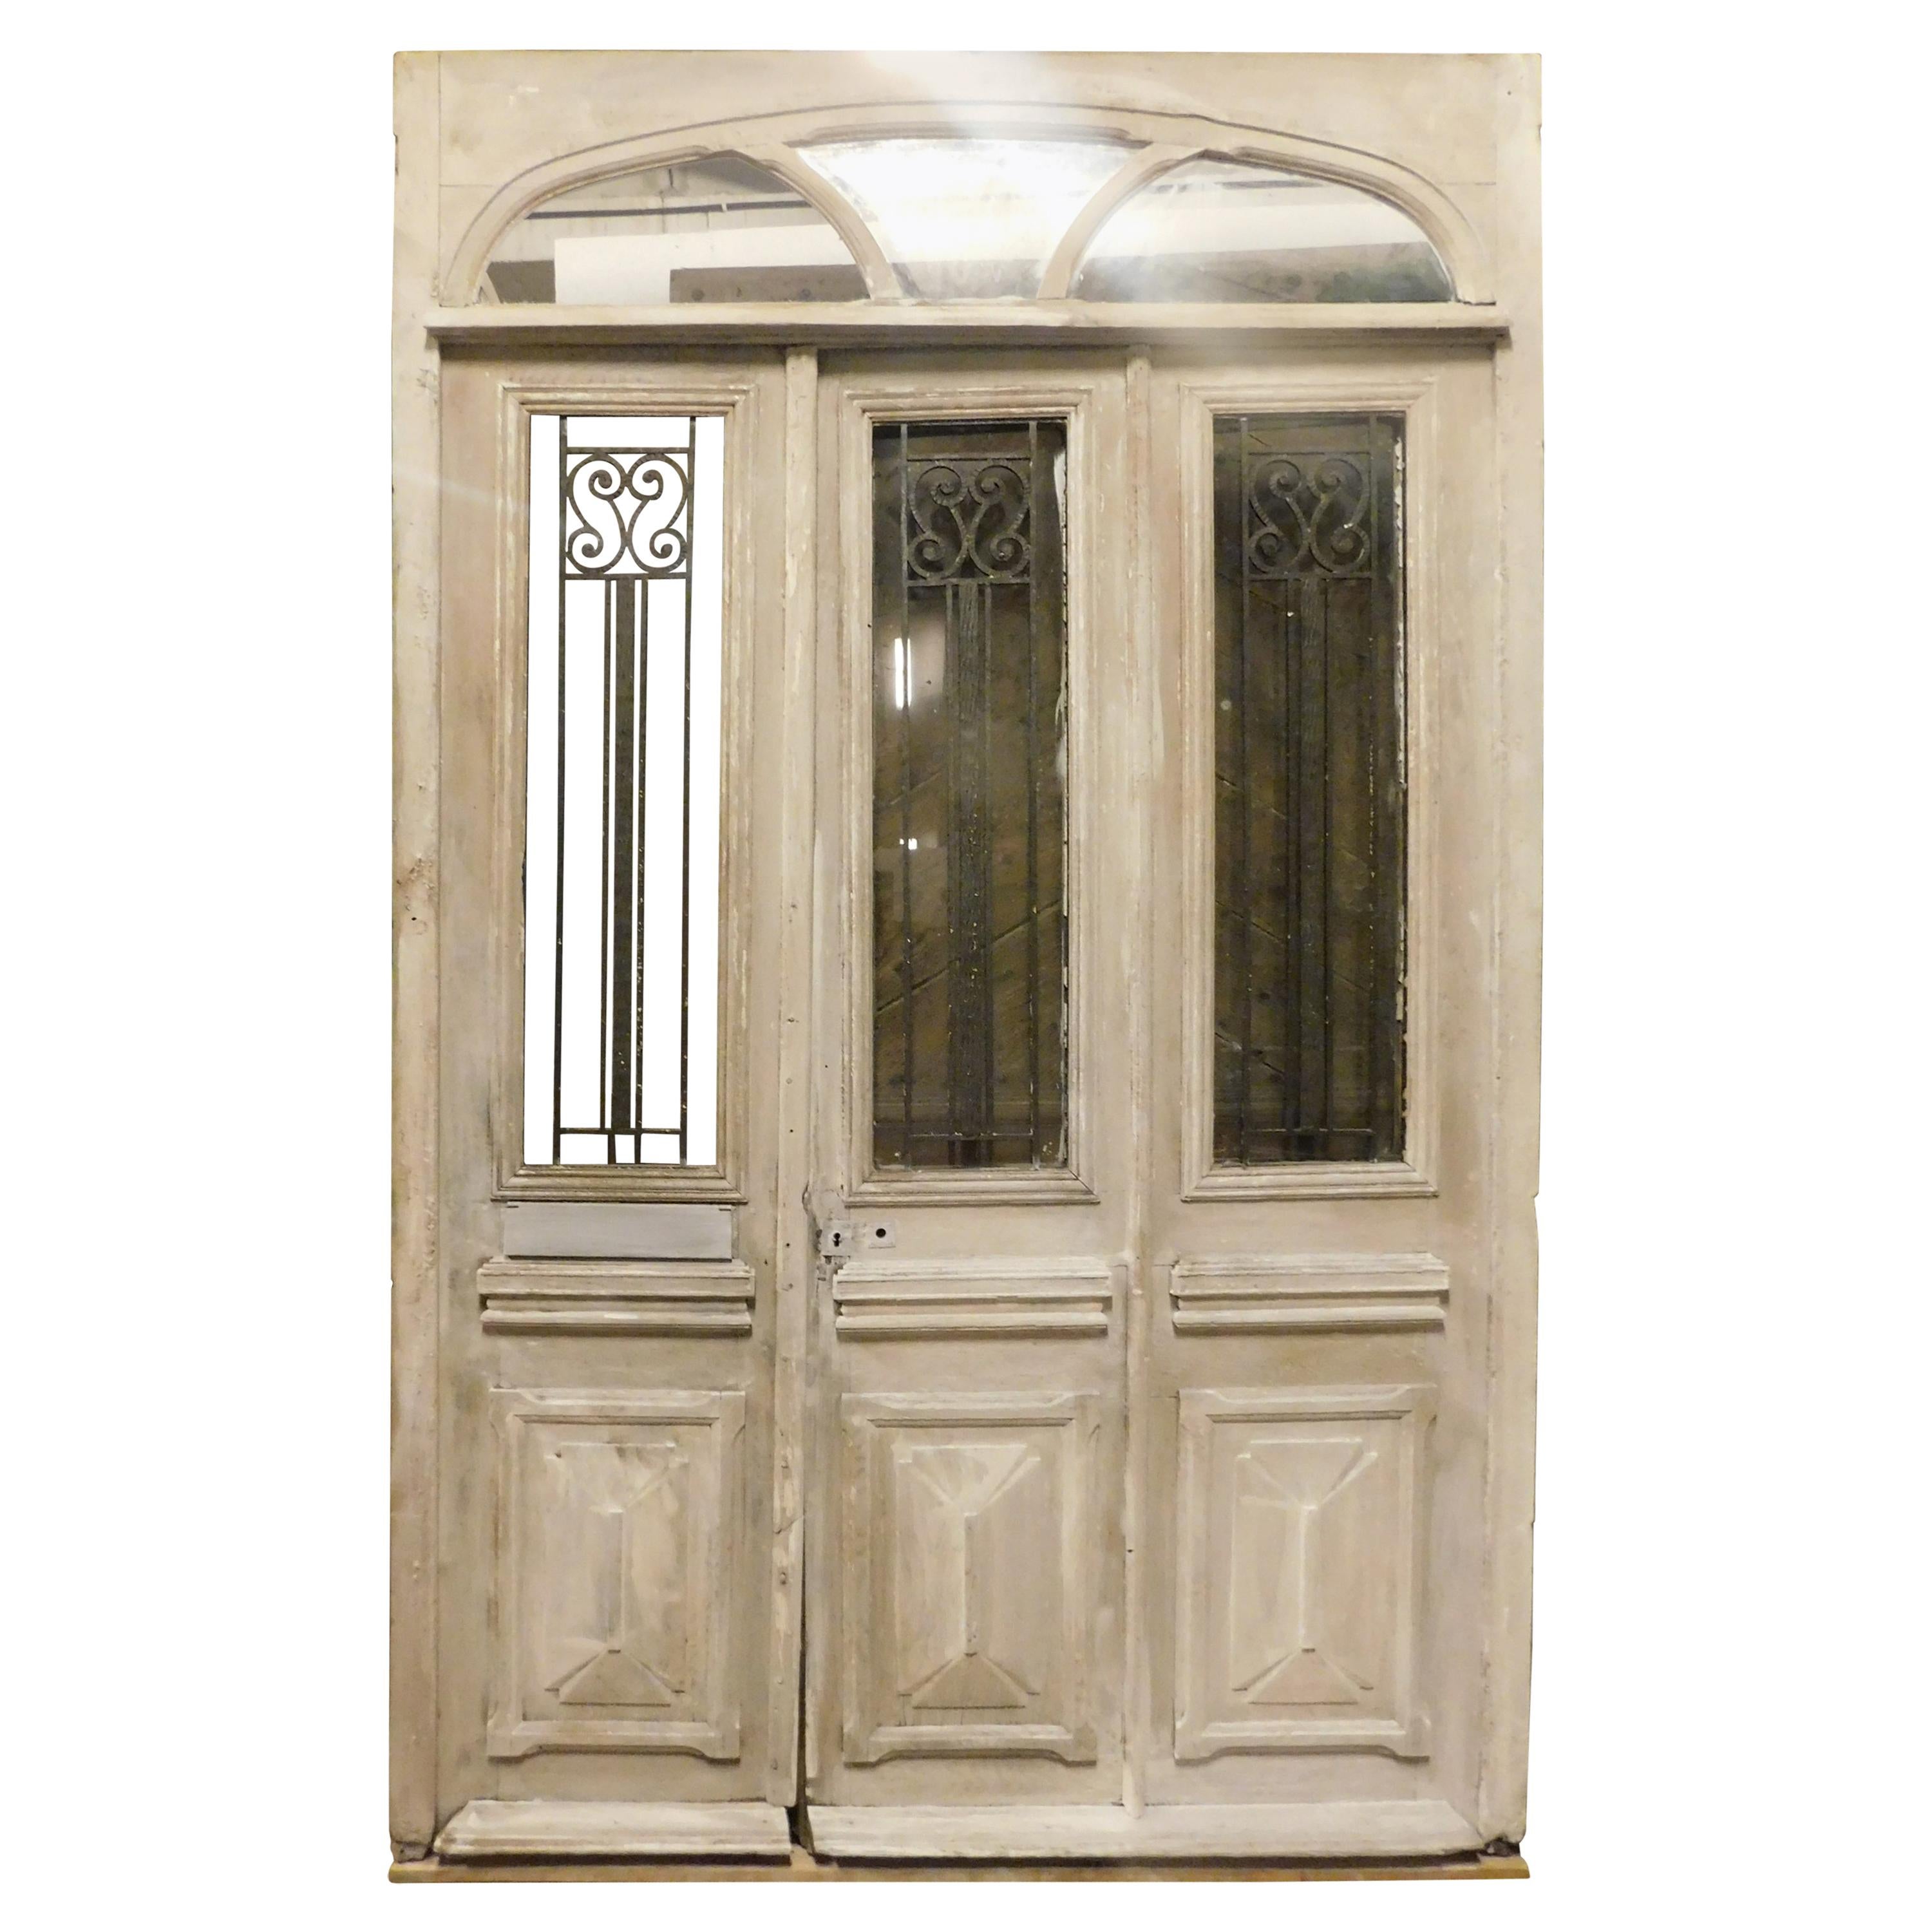 c1950 QUARTERSAWN oak paneled door with GLASS italian american home 82" x 36.25" 